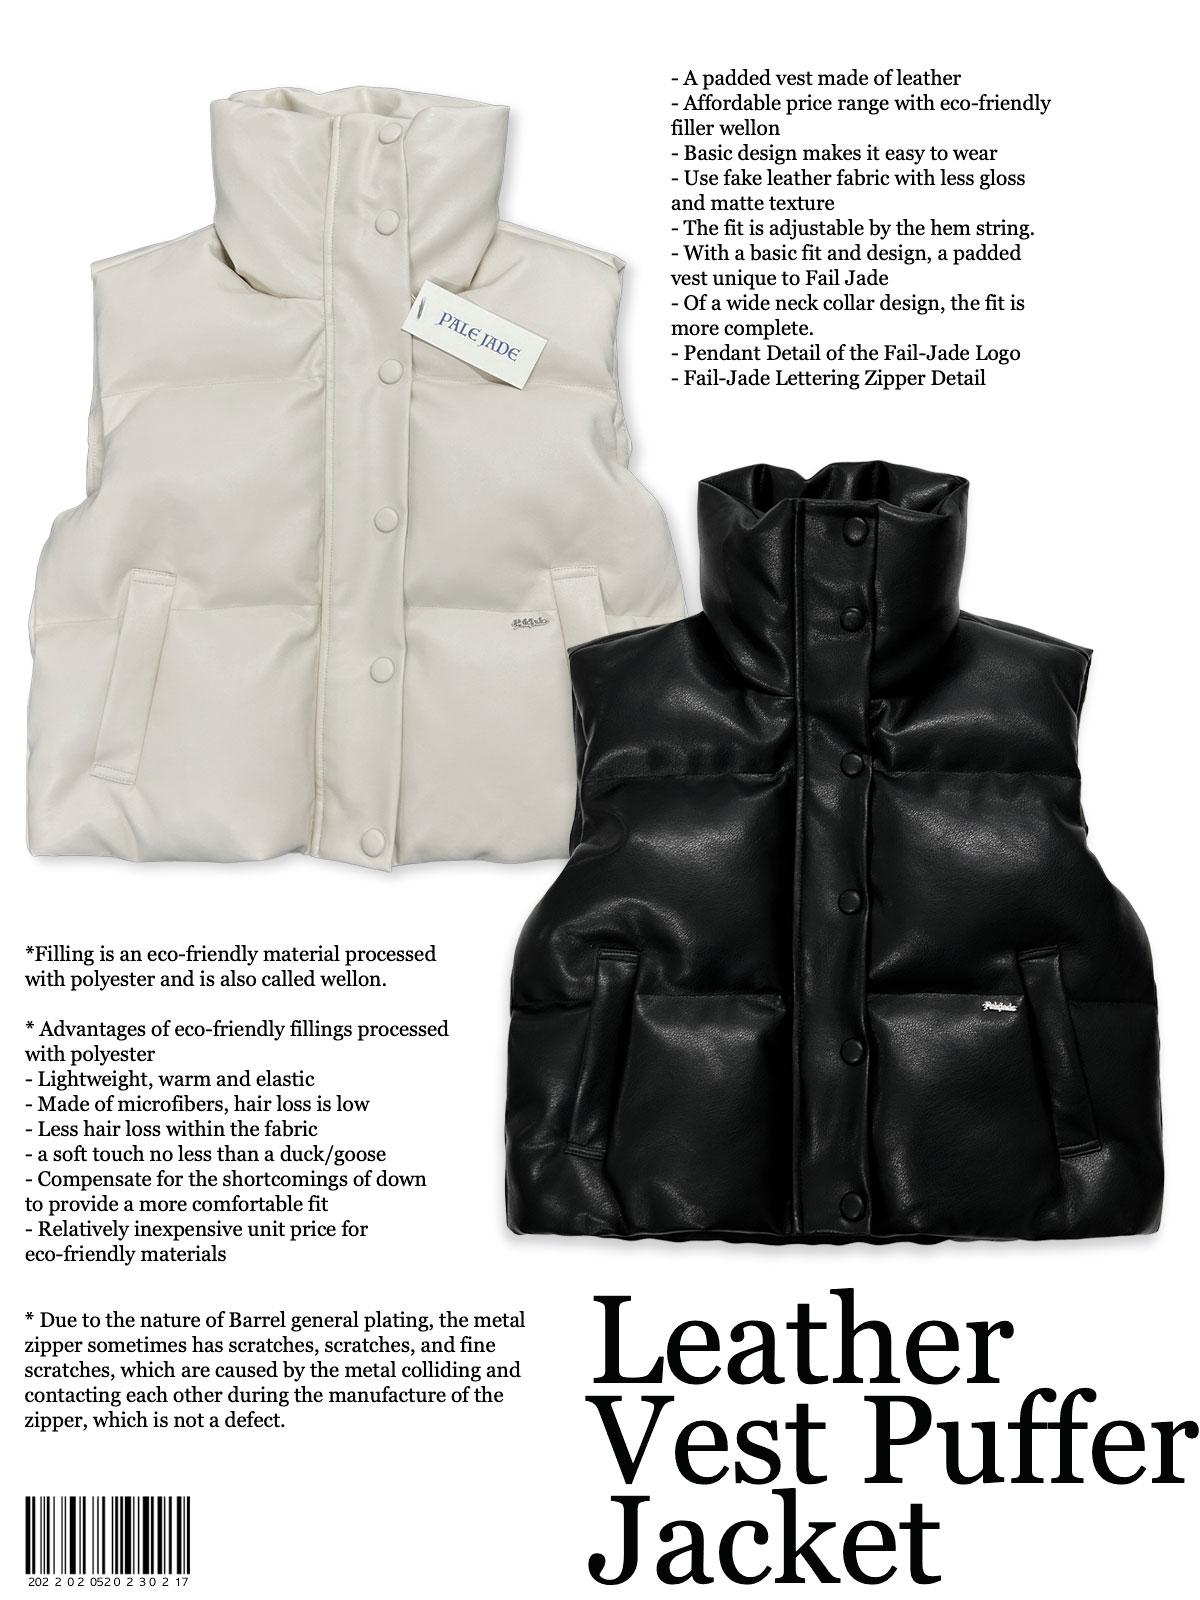 Leather Vest Puffer Jacket